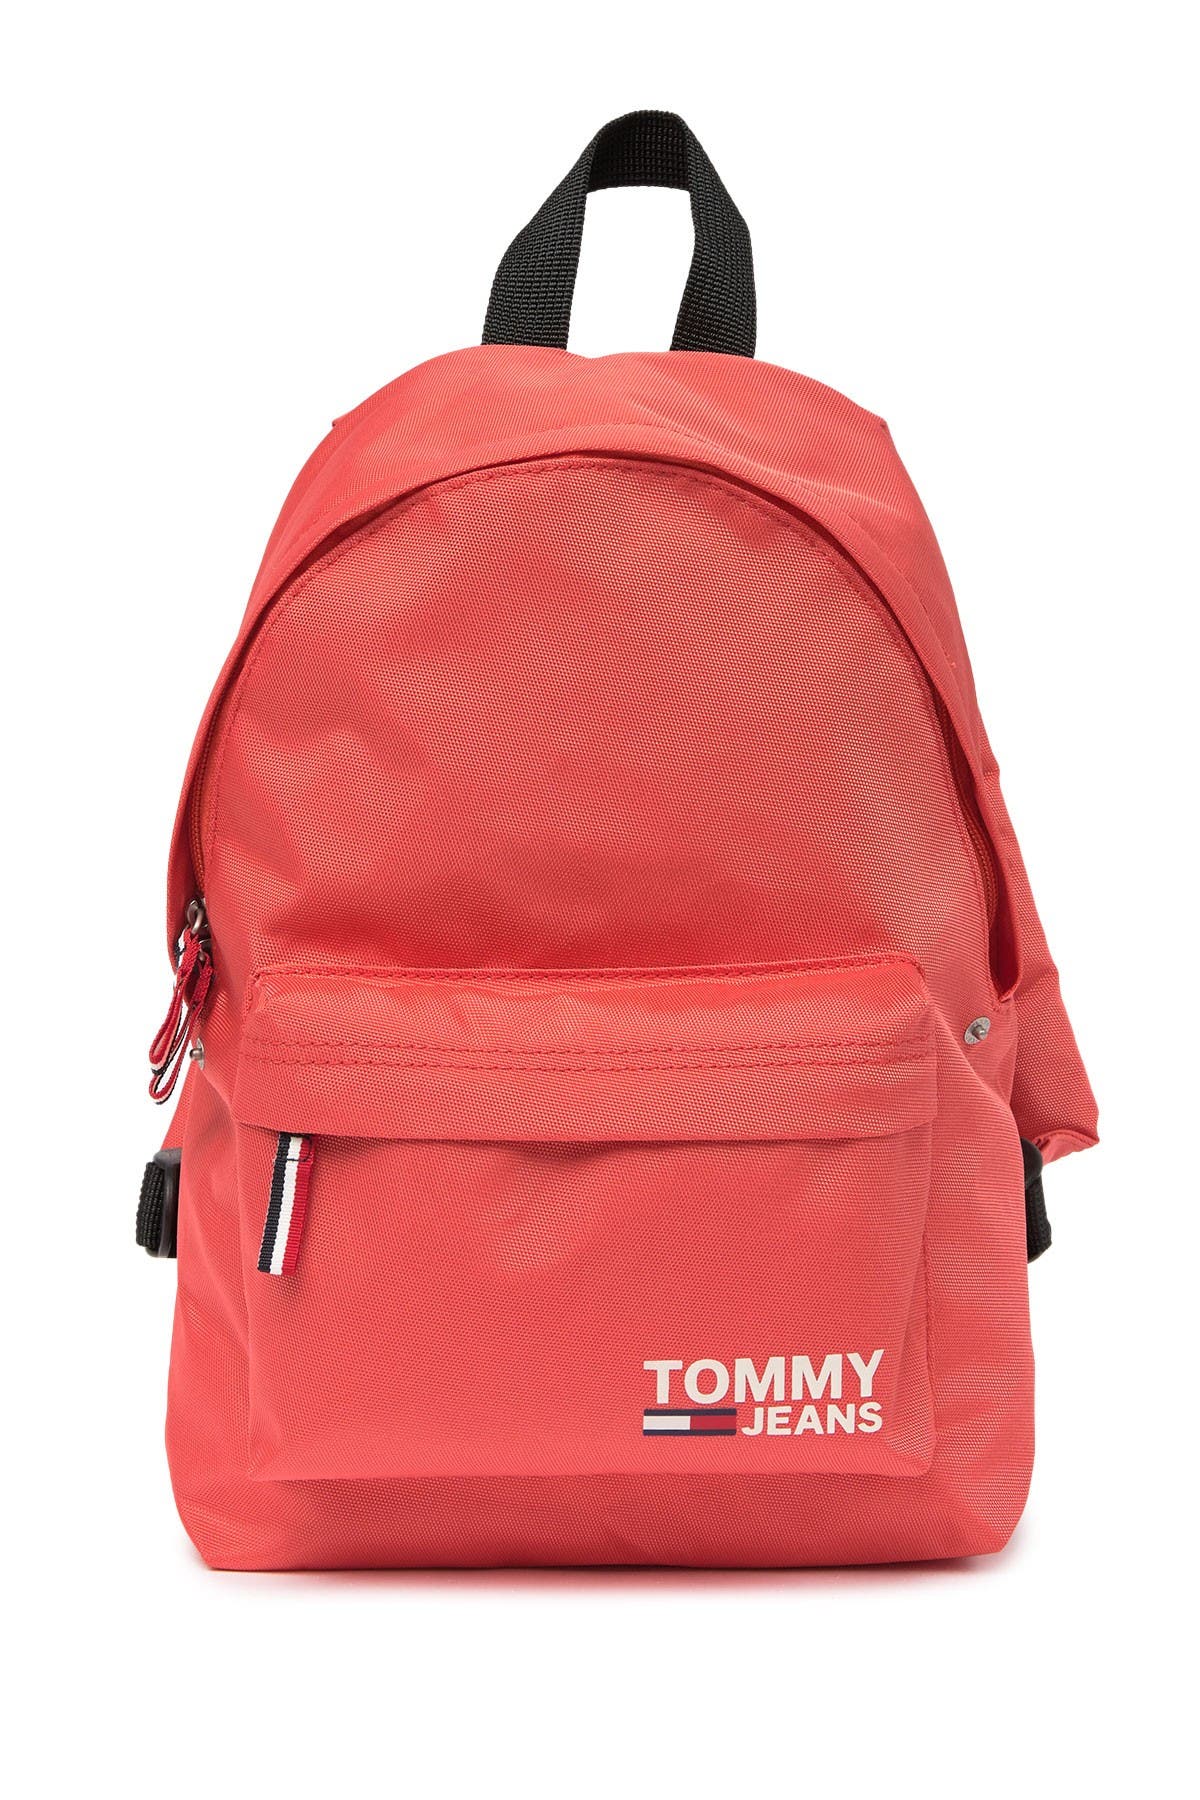 tommy hilfiger cool city backpack